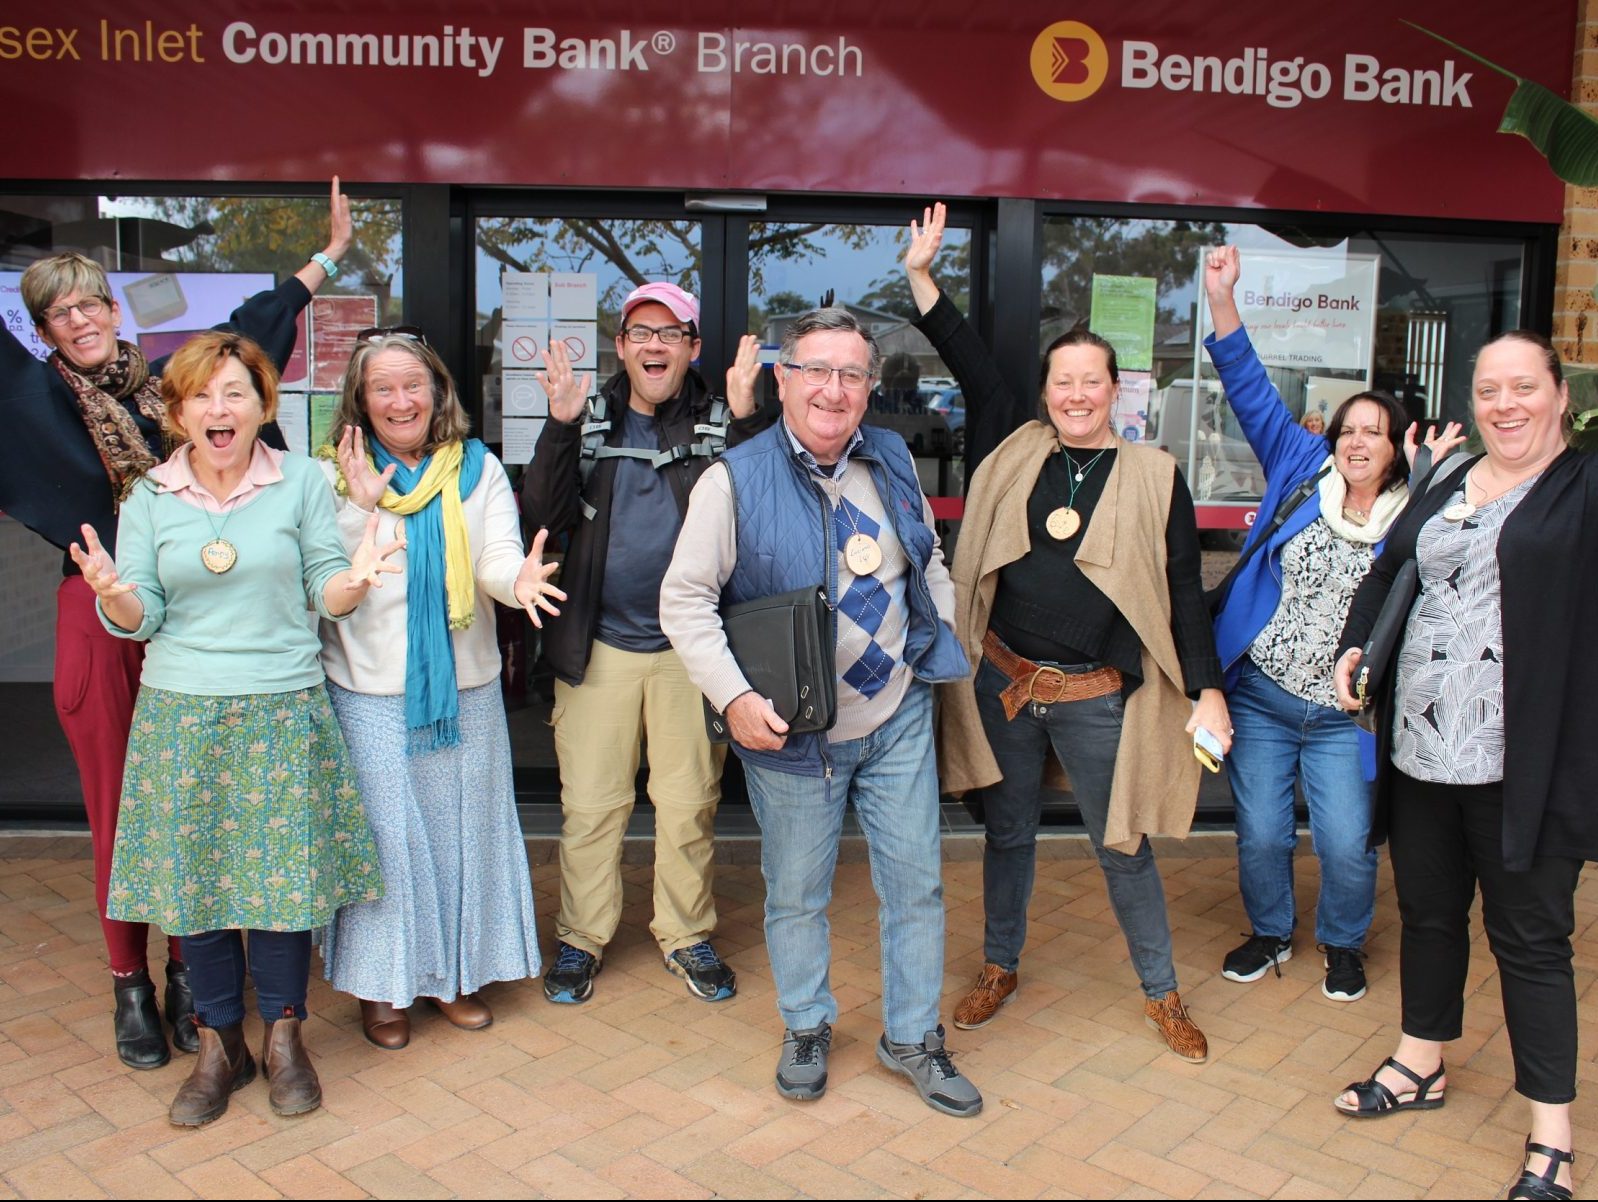 Group shot of 8 people cheering in front of Bendigo Bank